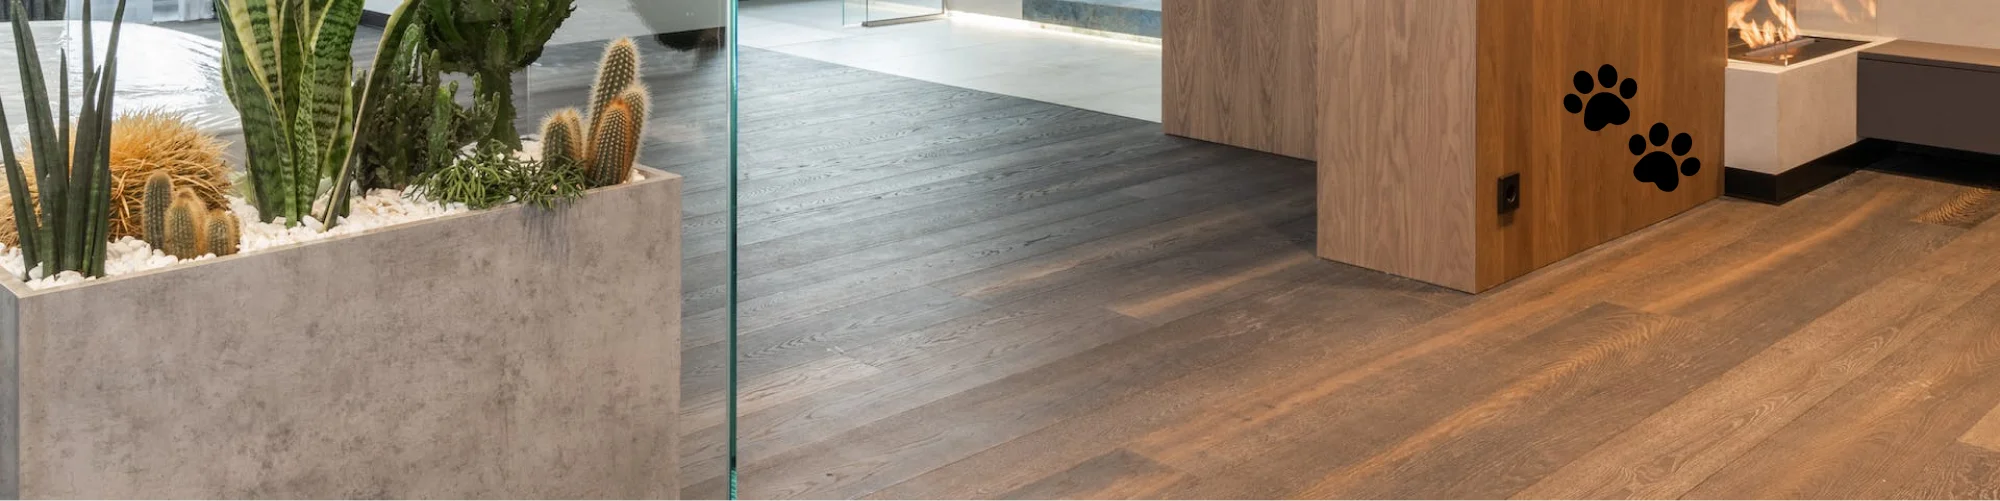 Get water resistant vinyl flooring installed